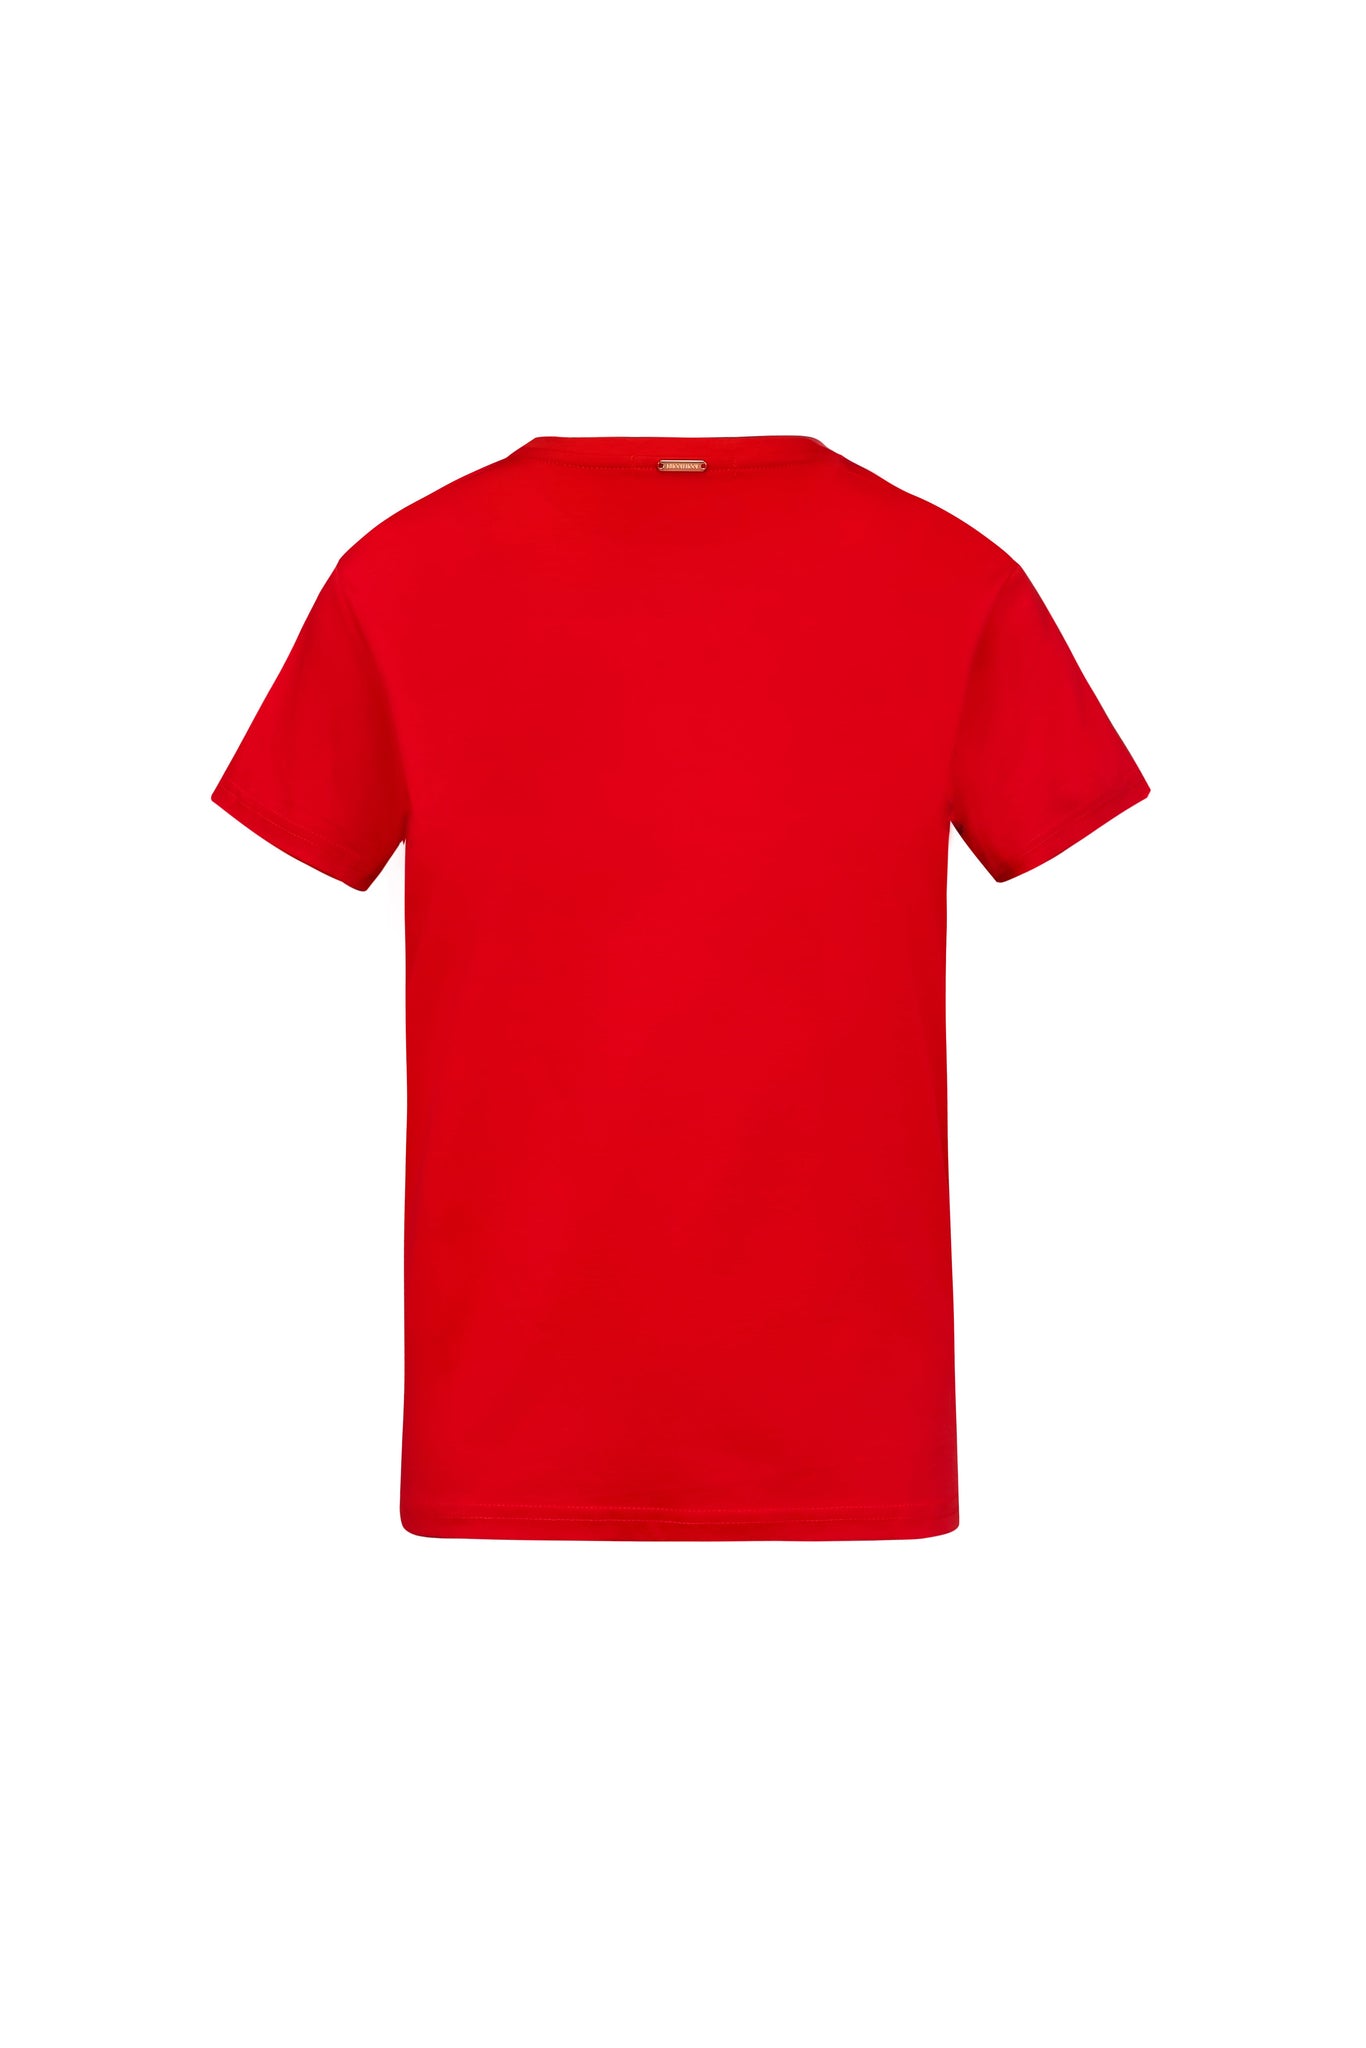 Dean T Shirt Cora in Crimson